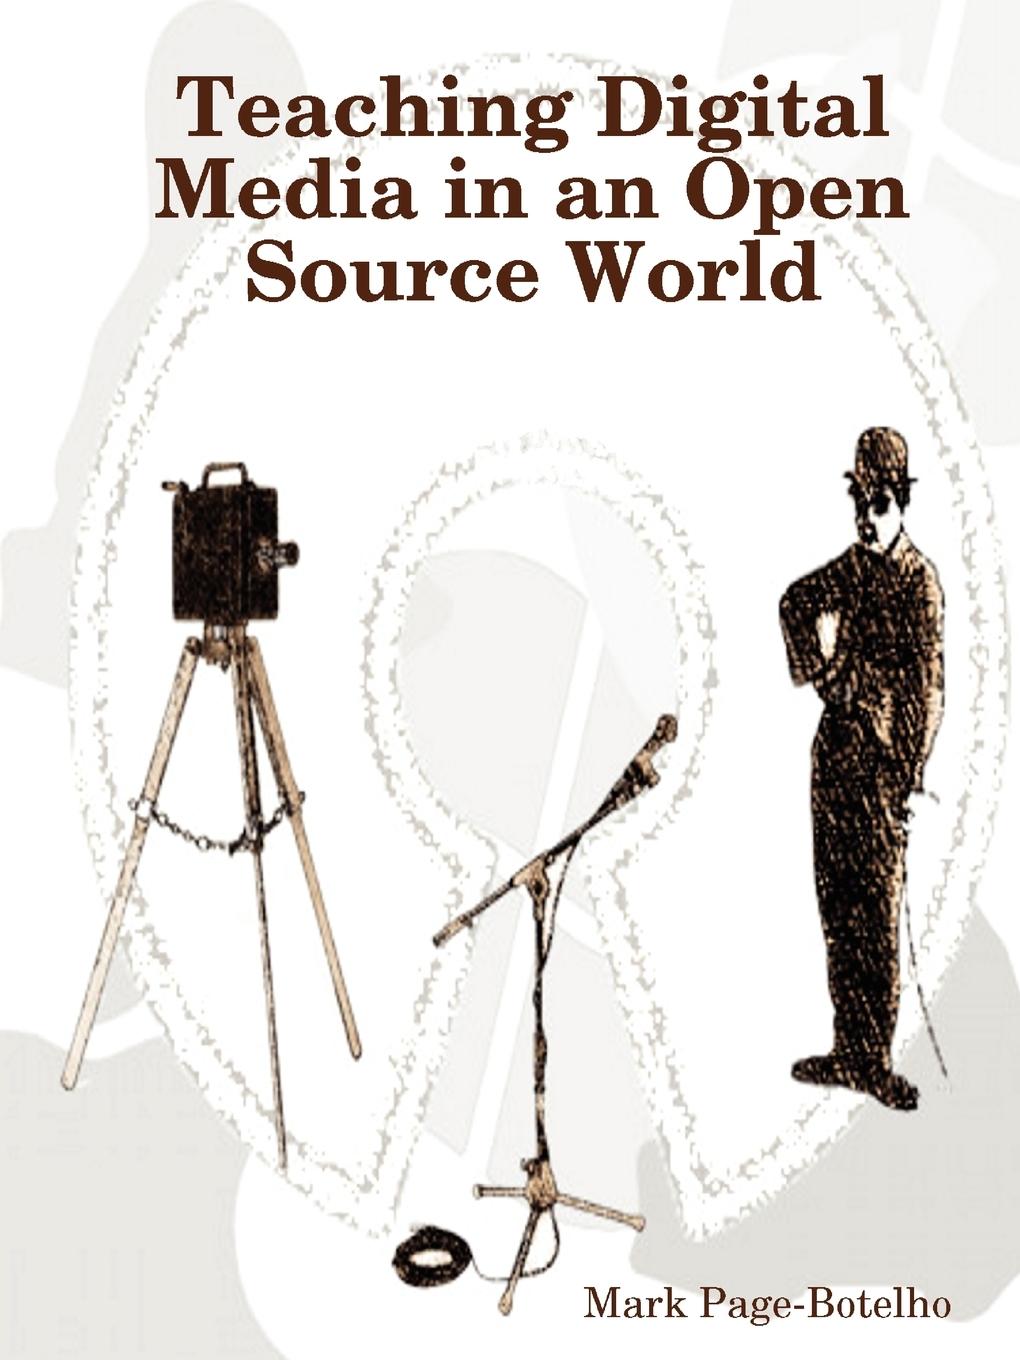 Teaching Digital Media in an Open Source World - Page-Botelho, Mark